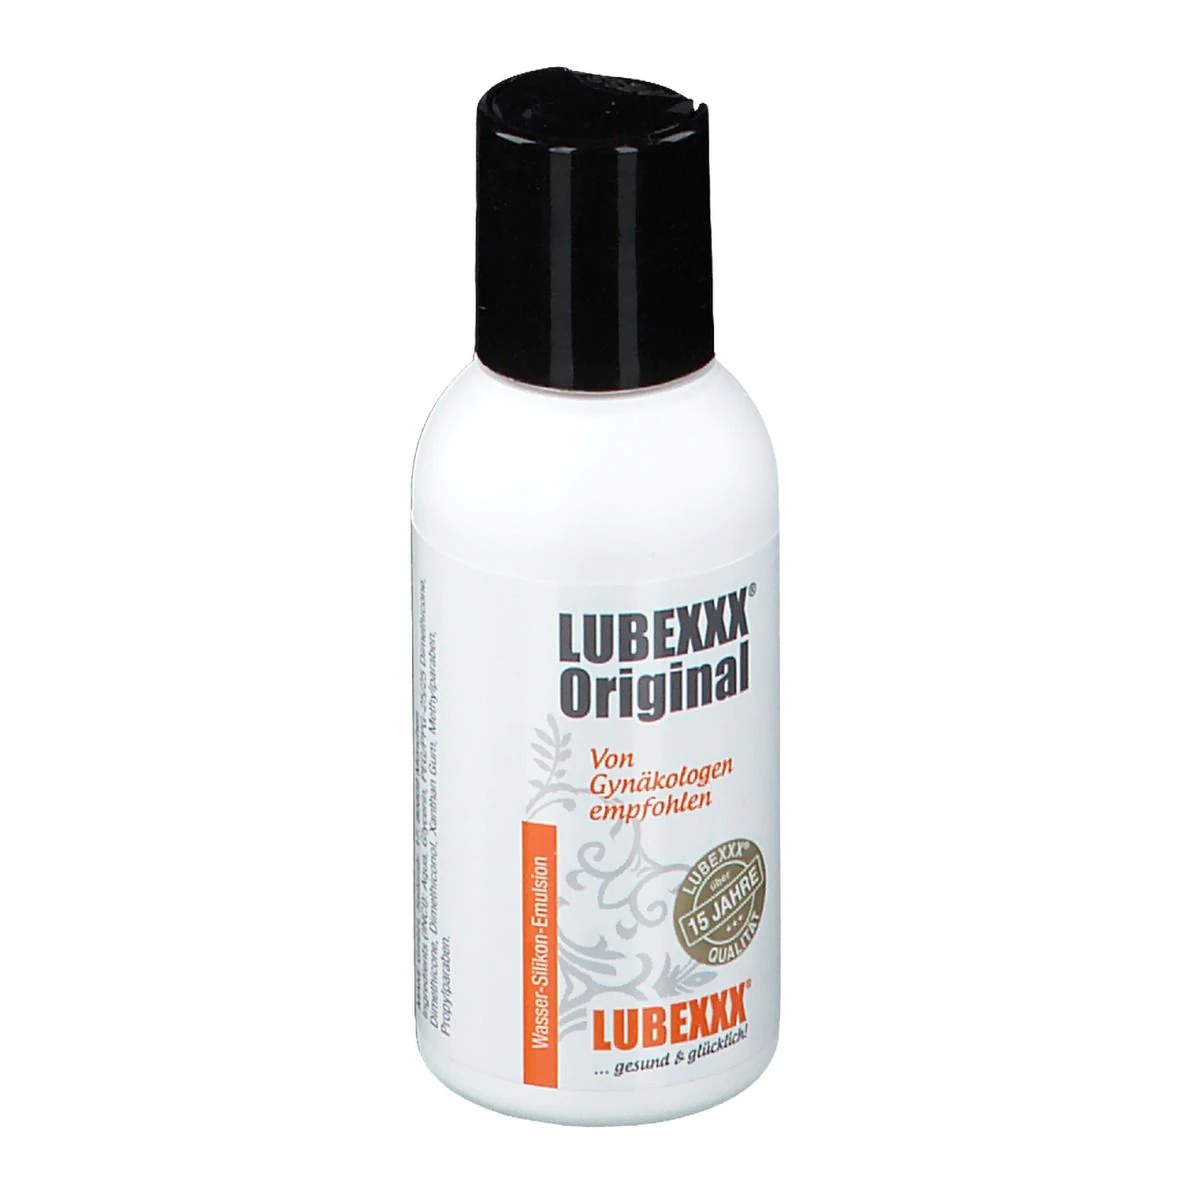 Gel lubrifiant vaginal Lubexxx Original, 50 ml, HoBo Marketing GmbH